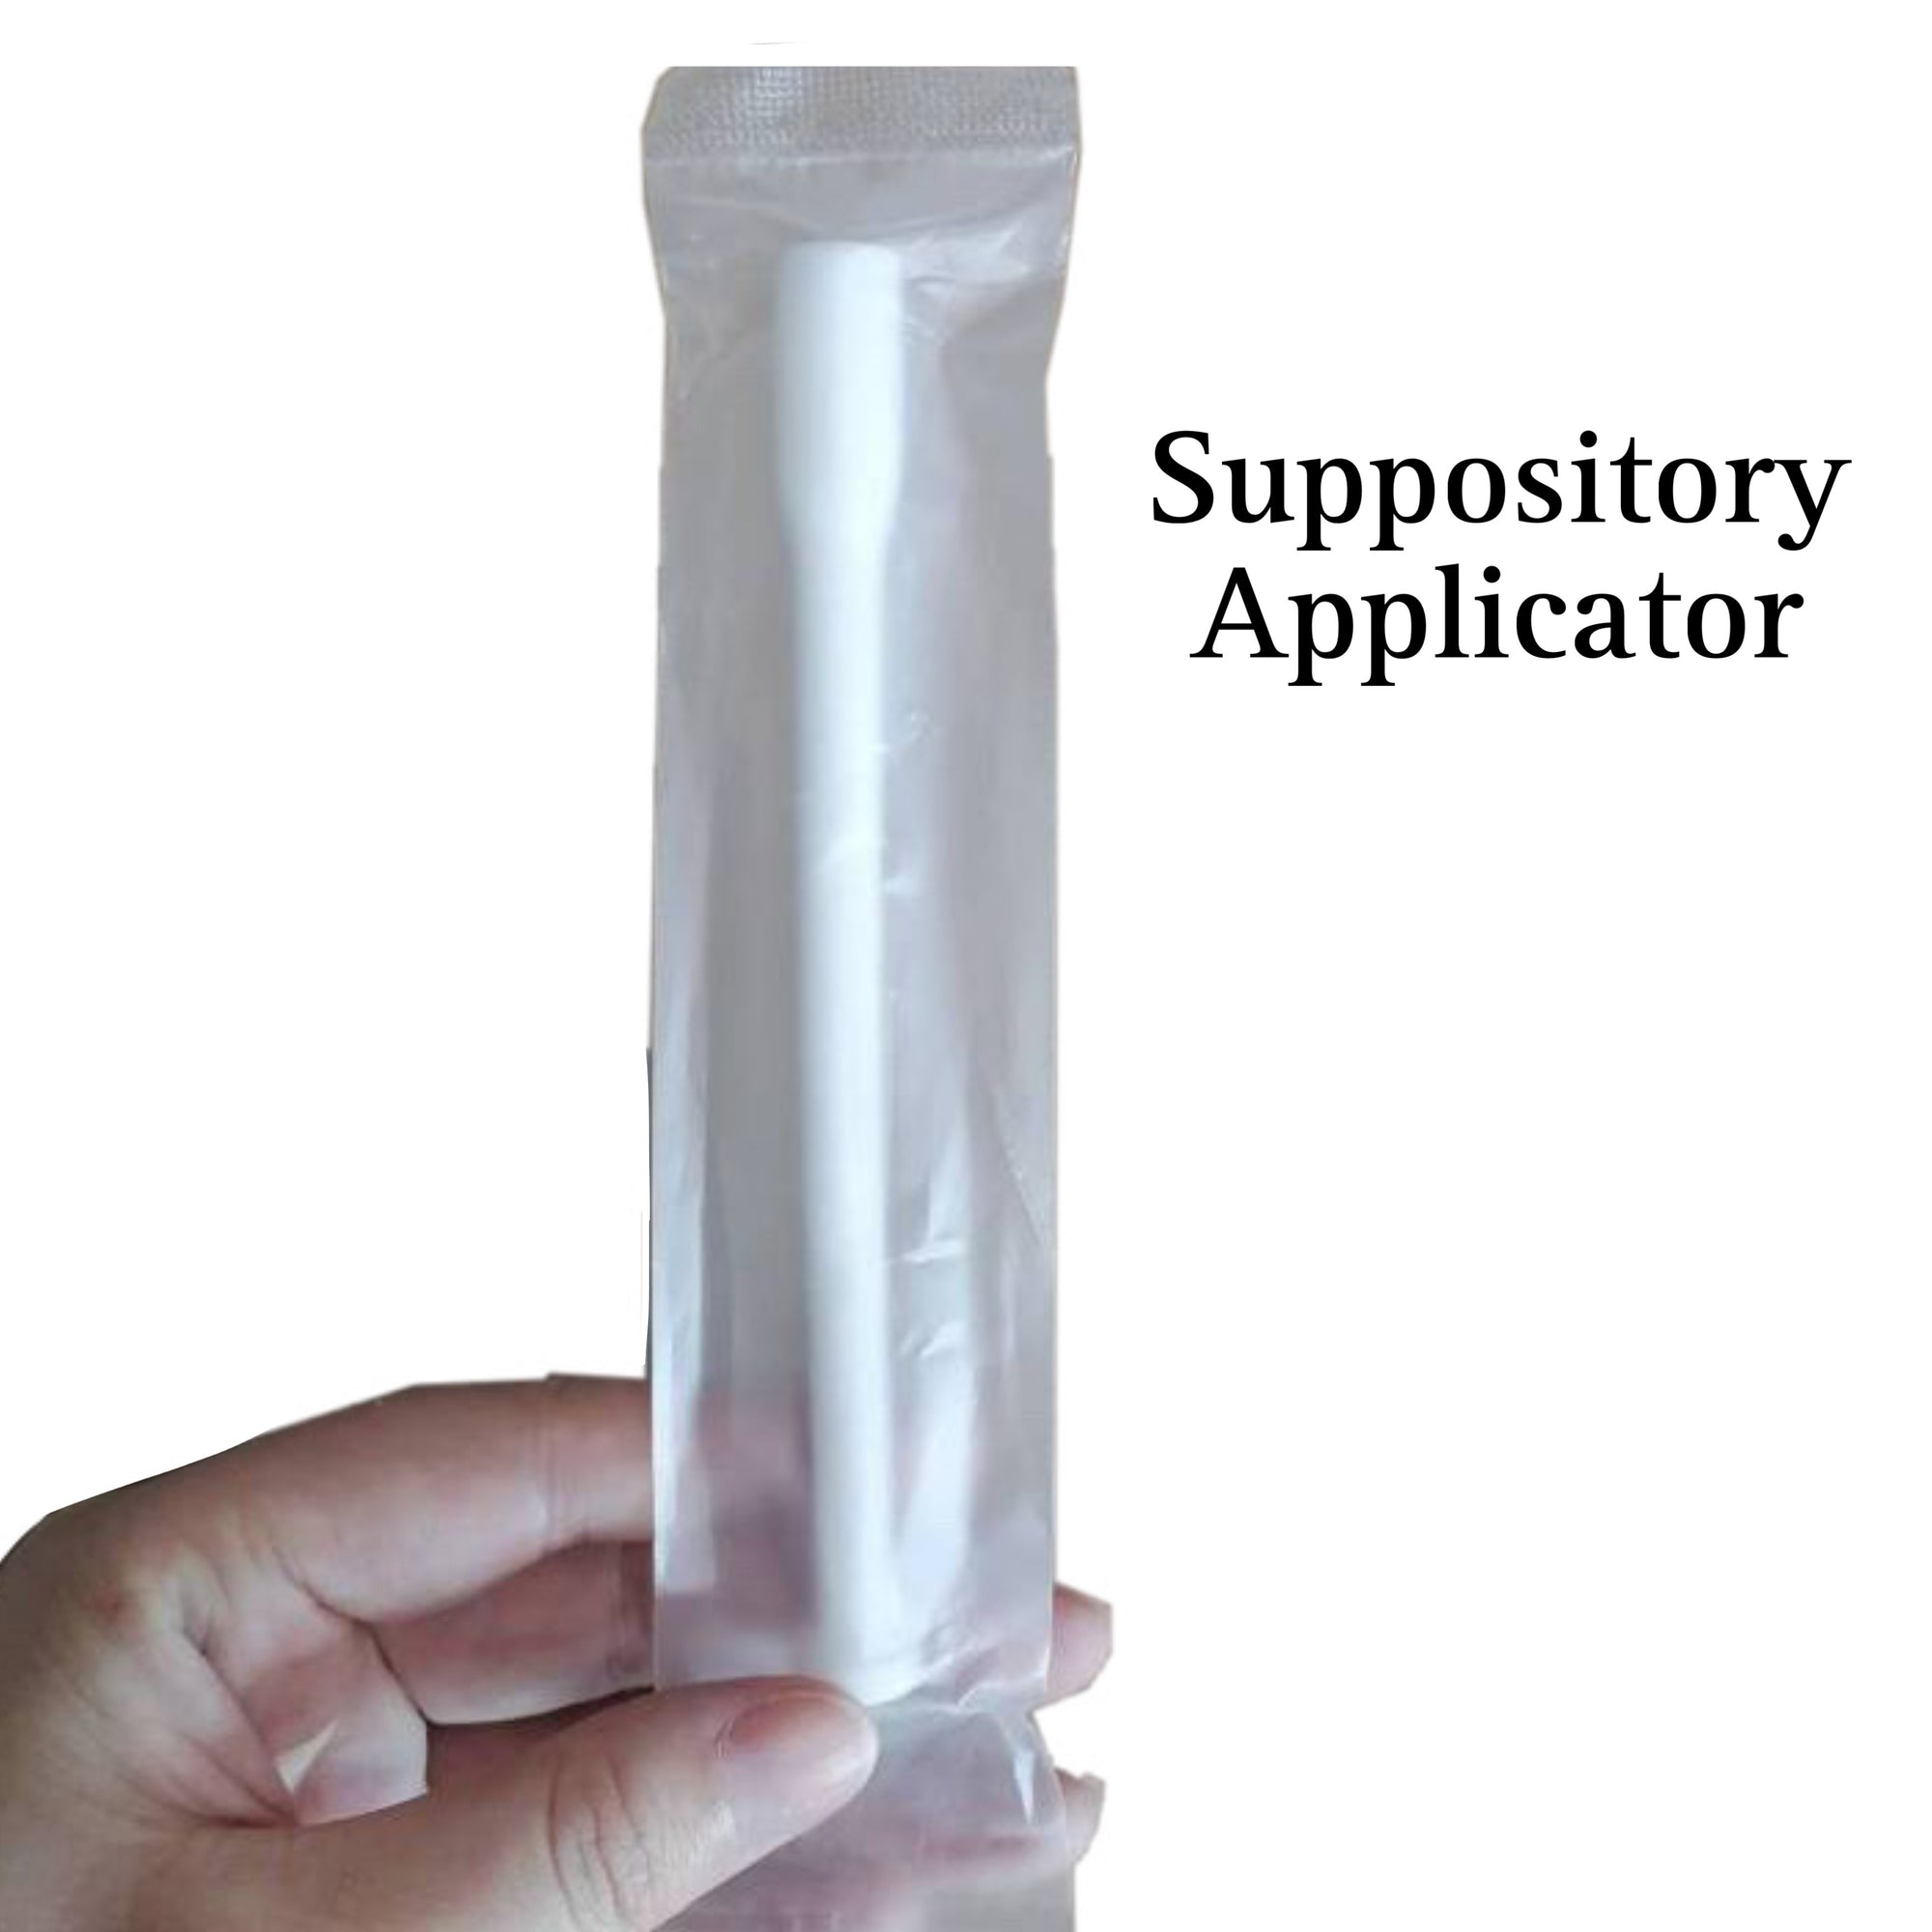 10 suppository Applicators (For Boric Acid ph Pops)